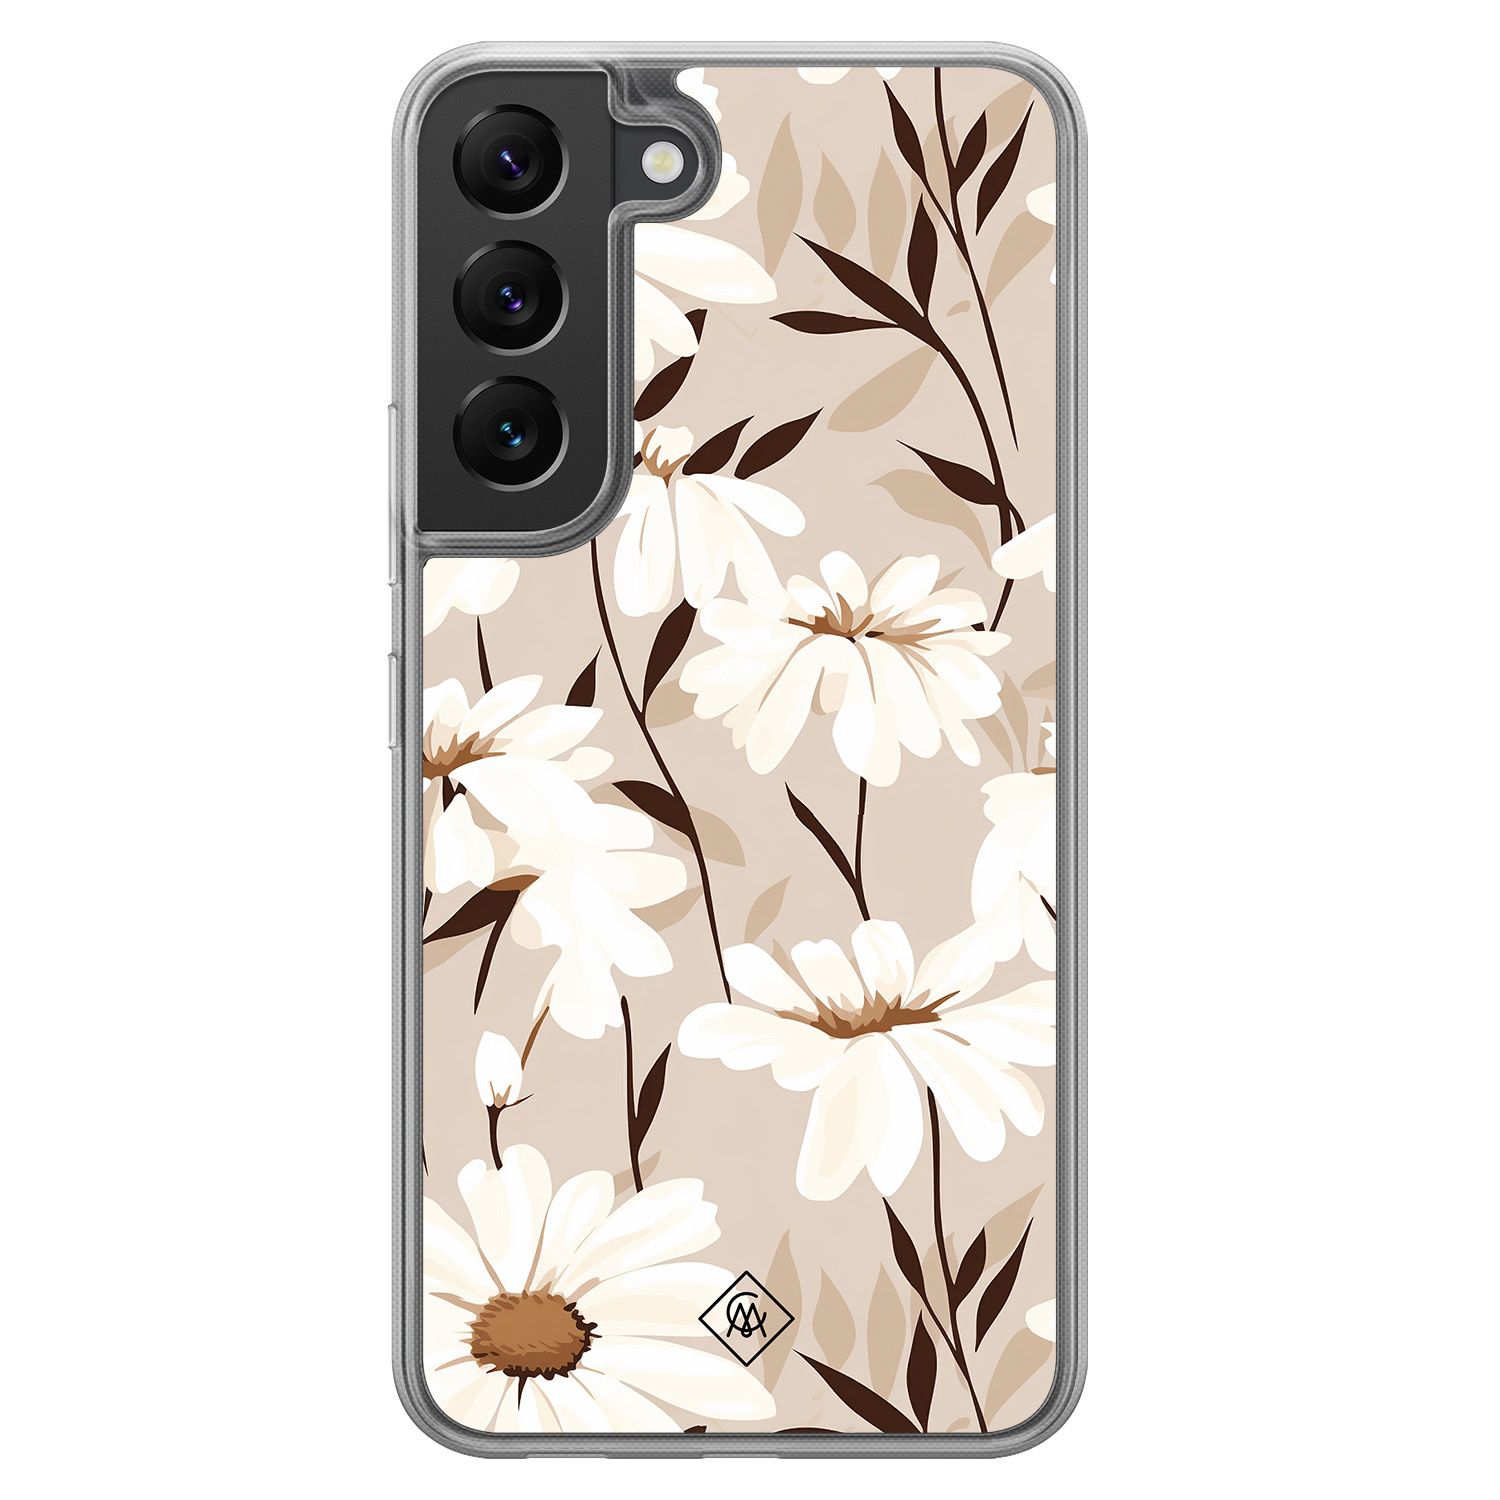 Samsung Galaxy S22 hoesje siliconen - In bloom - Casimoda® 2-in-1 case hybride - Schokbestendig - Bloemen - Verhoogde randen - Bruin/beige, Transparant